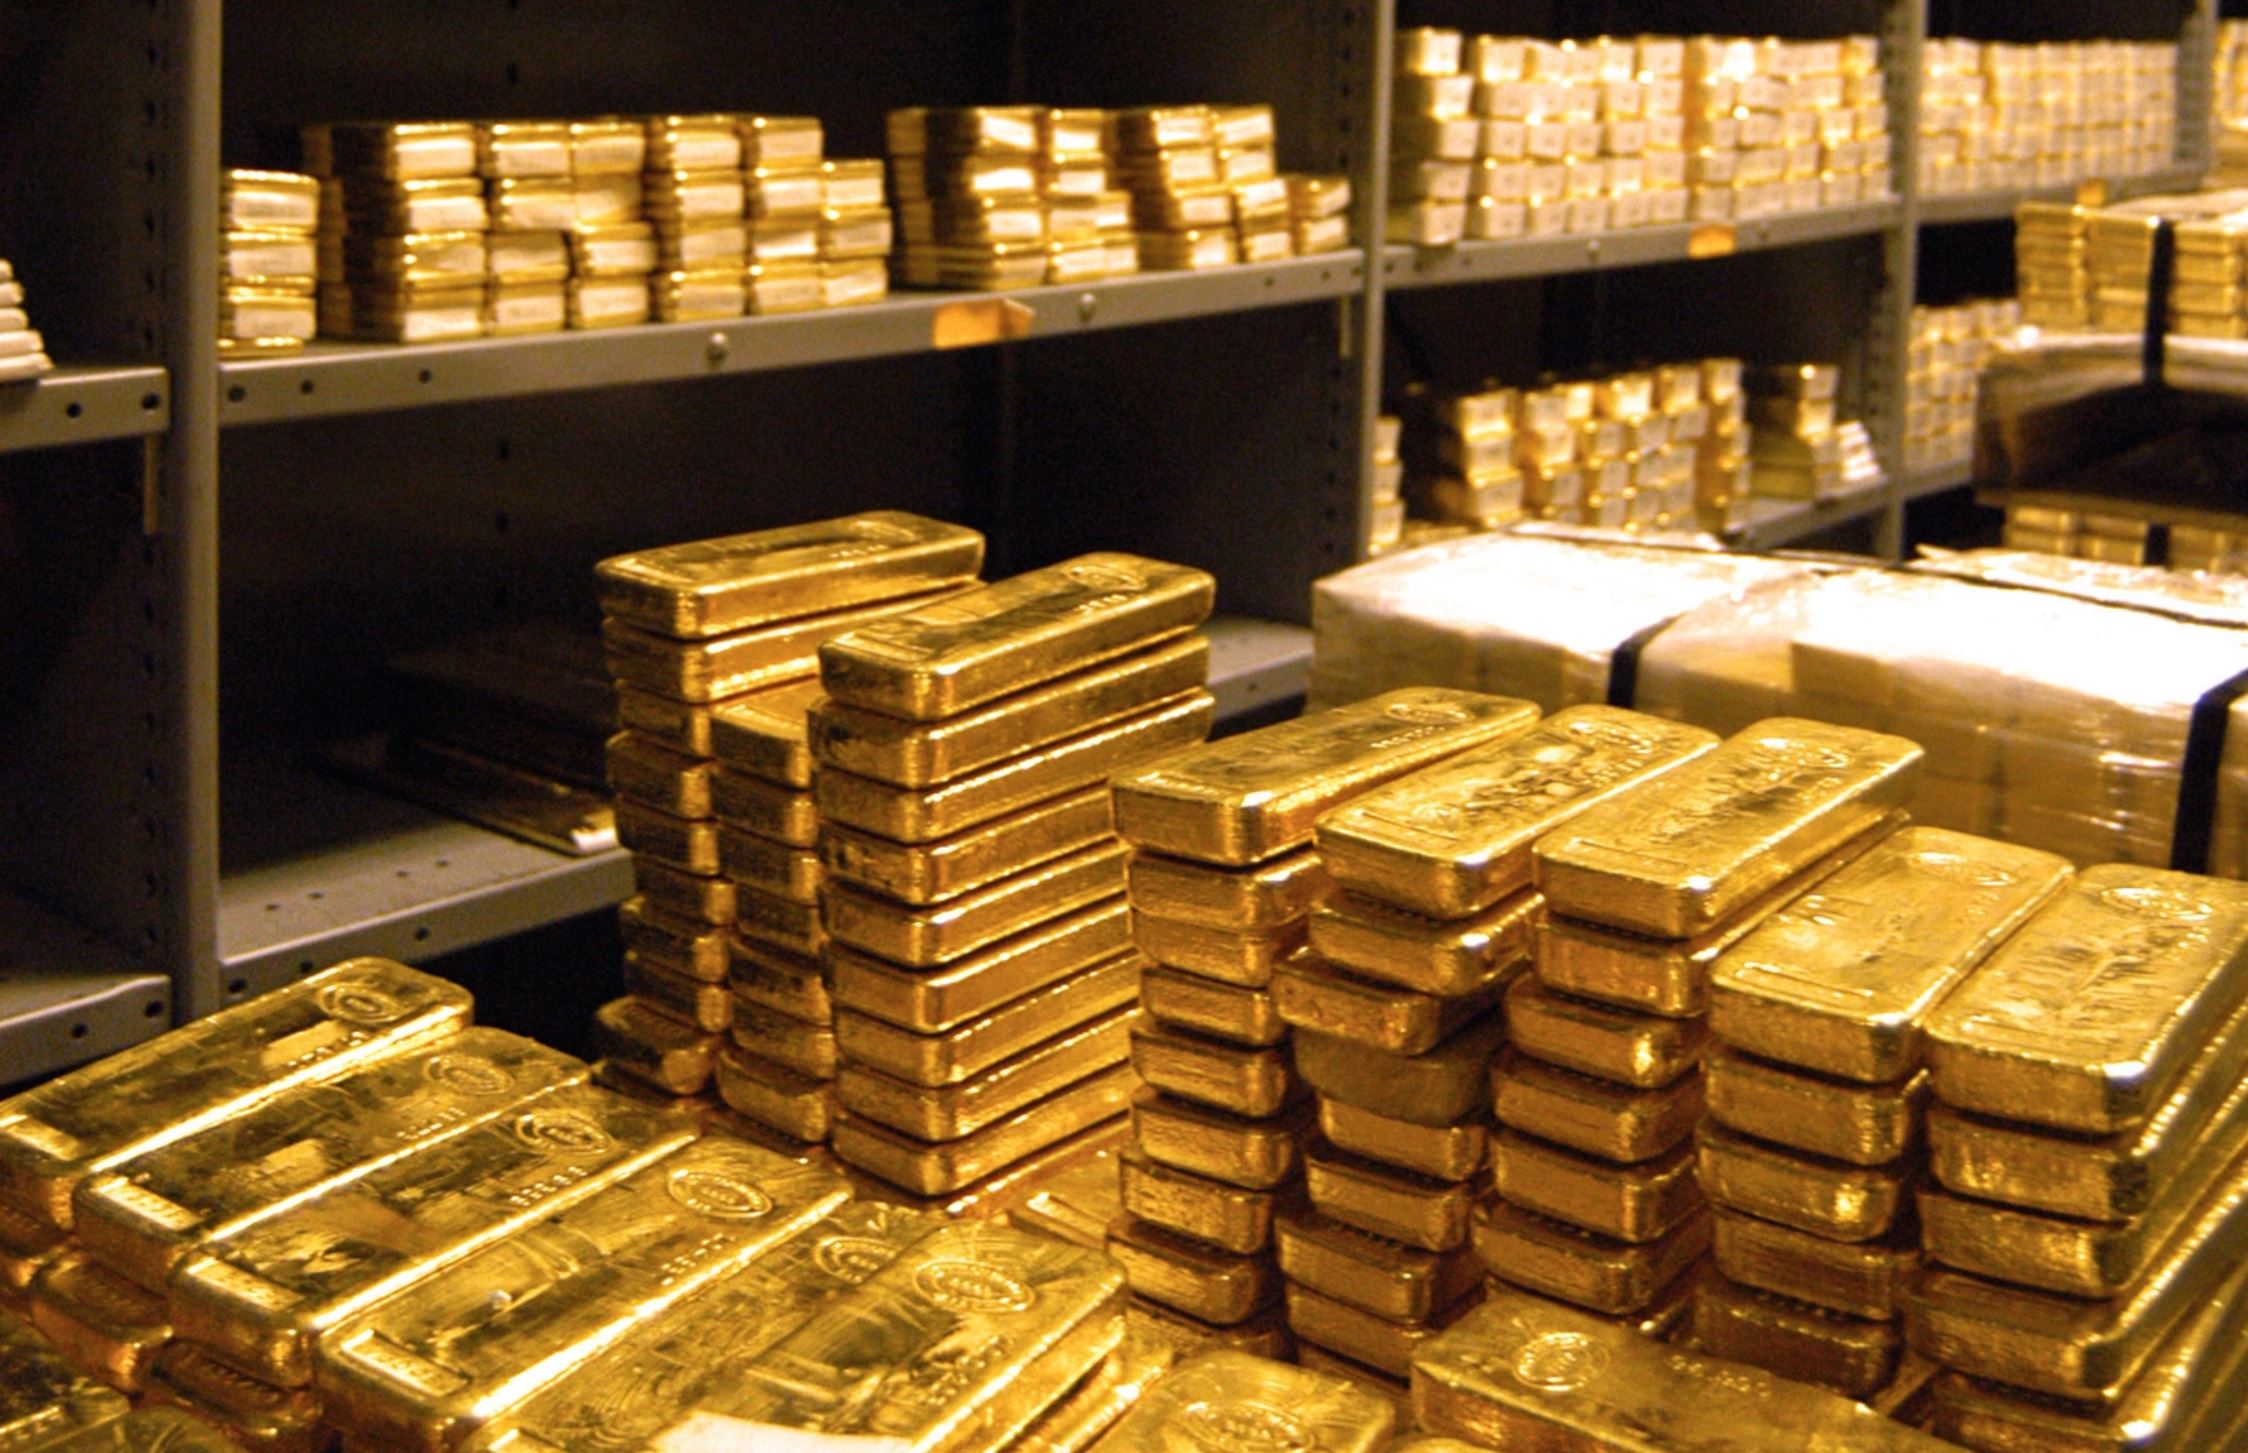 Банк покупает золото. Много золота. Деньги золото. Золото богатство. Склад золота.